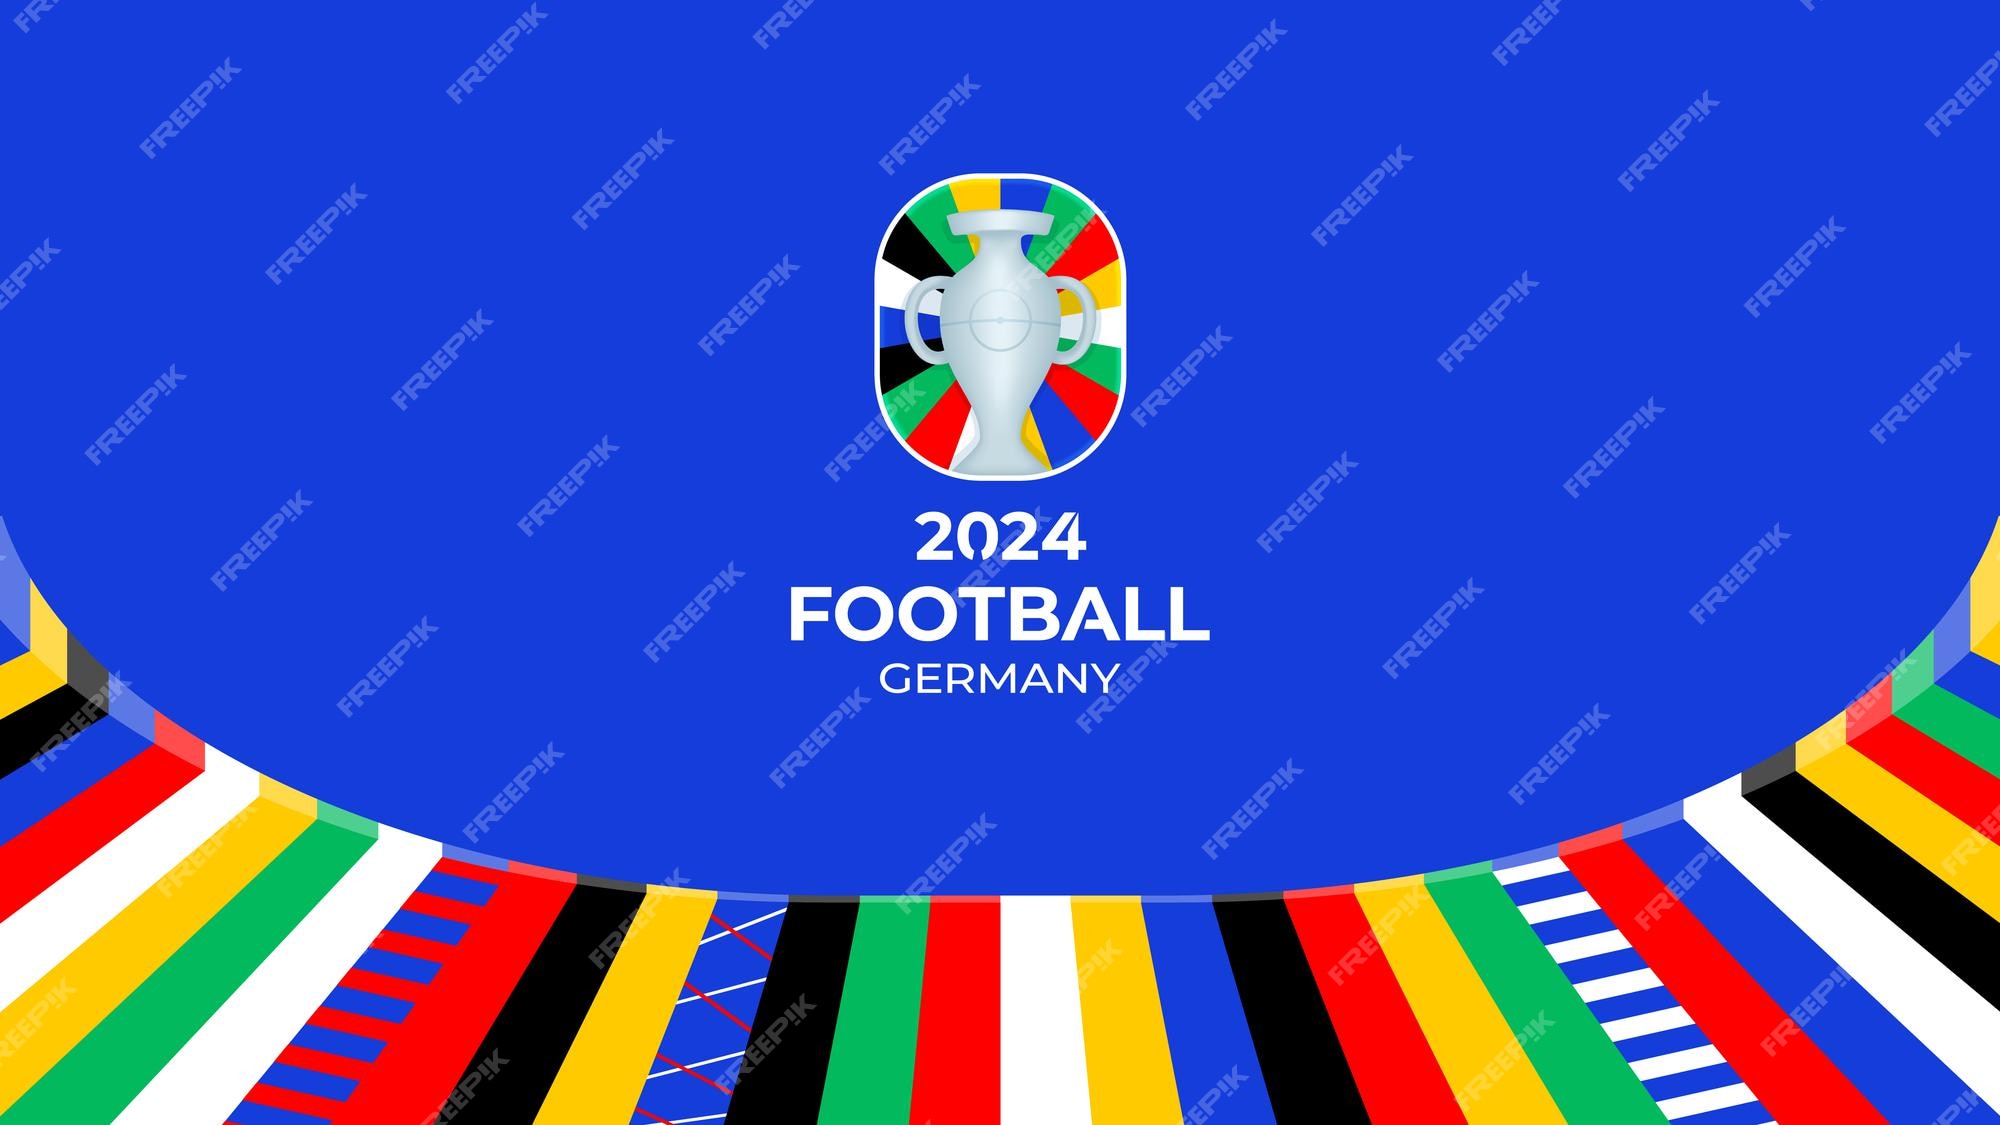 Premium Vector Football championship 2024 blue background vector